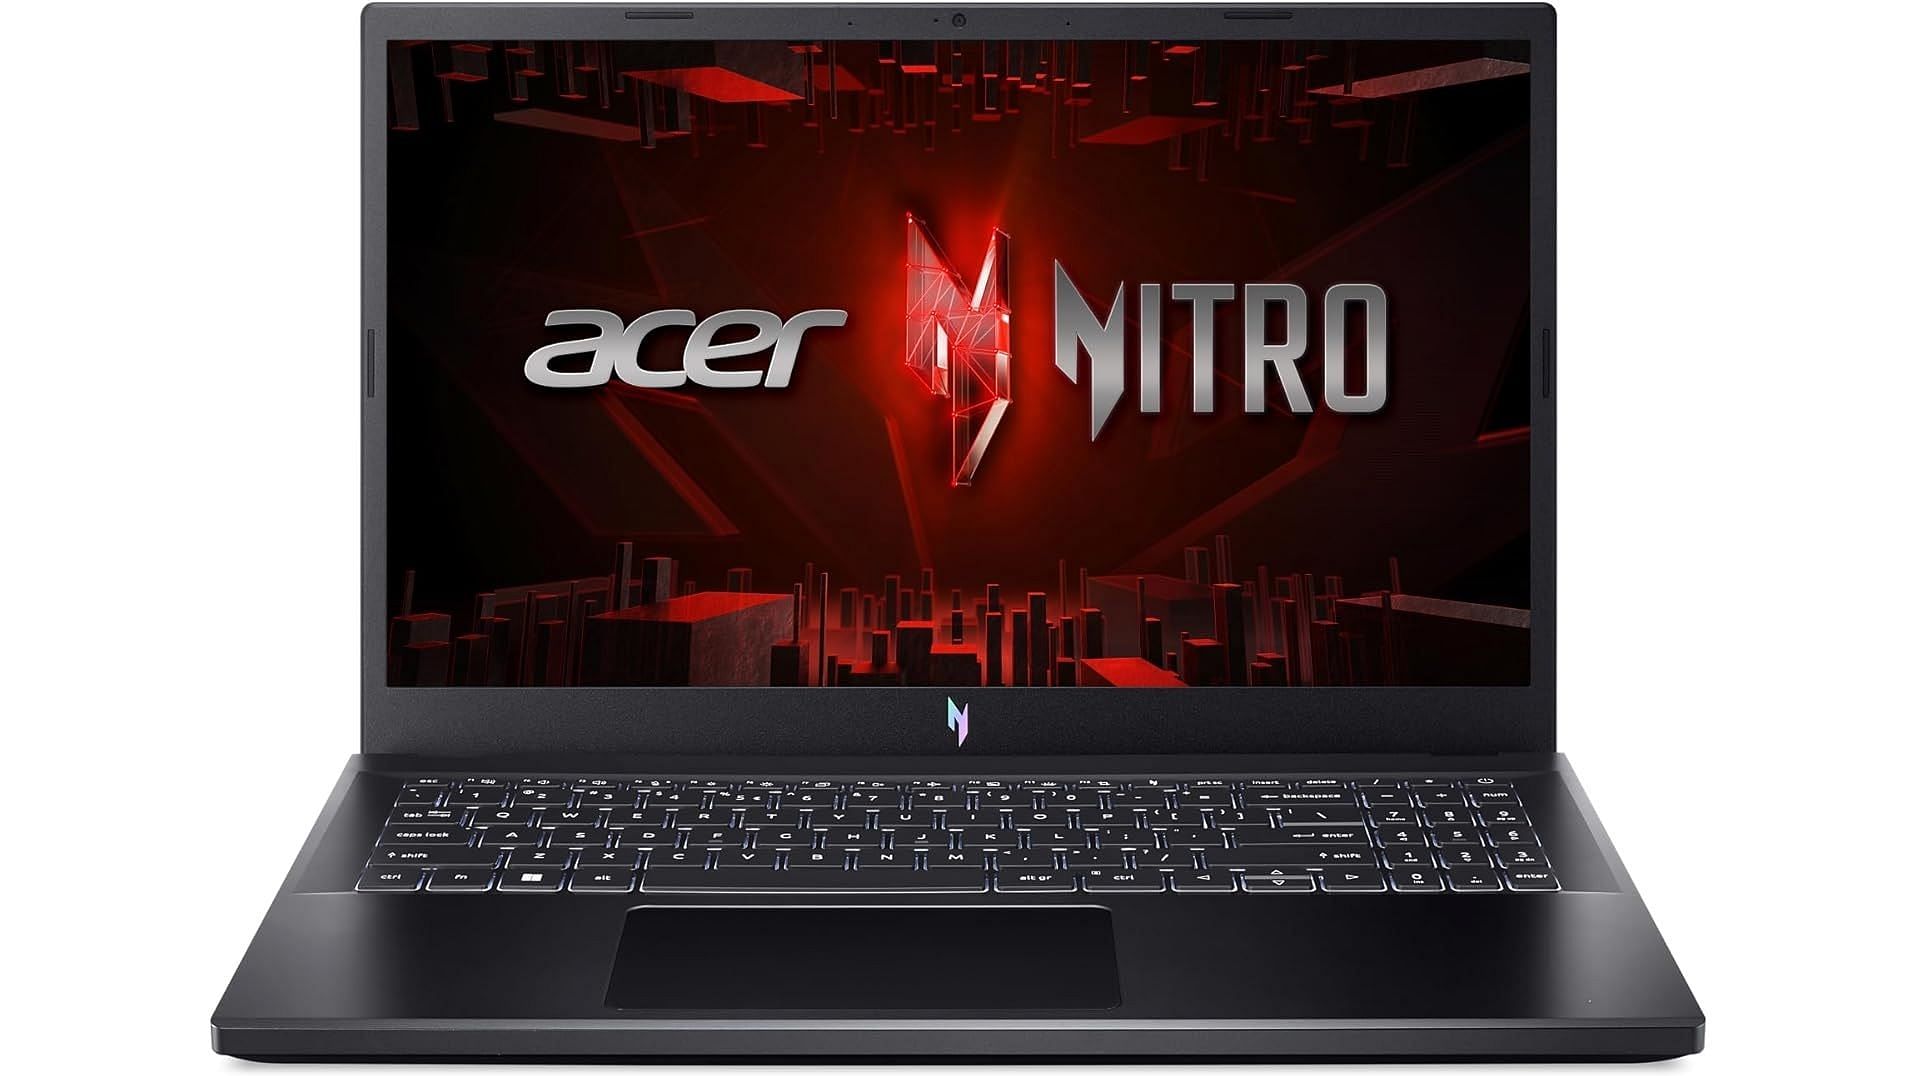 The Acer Nitro V ANV15-51-73B9 gaming laptop (Image via Acer/Amazon)